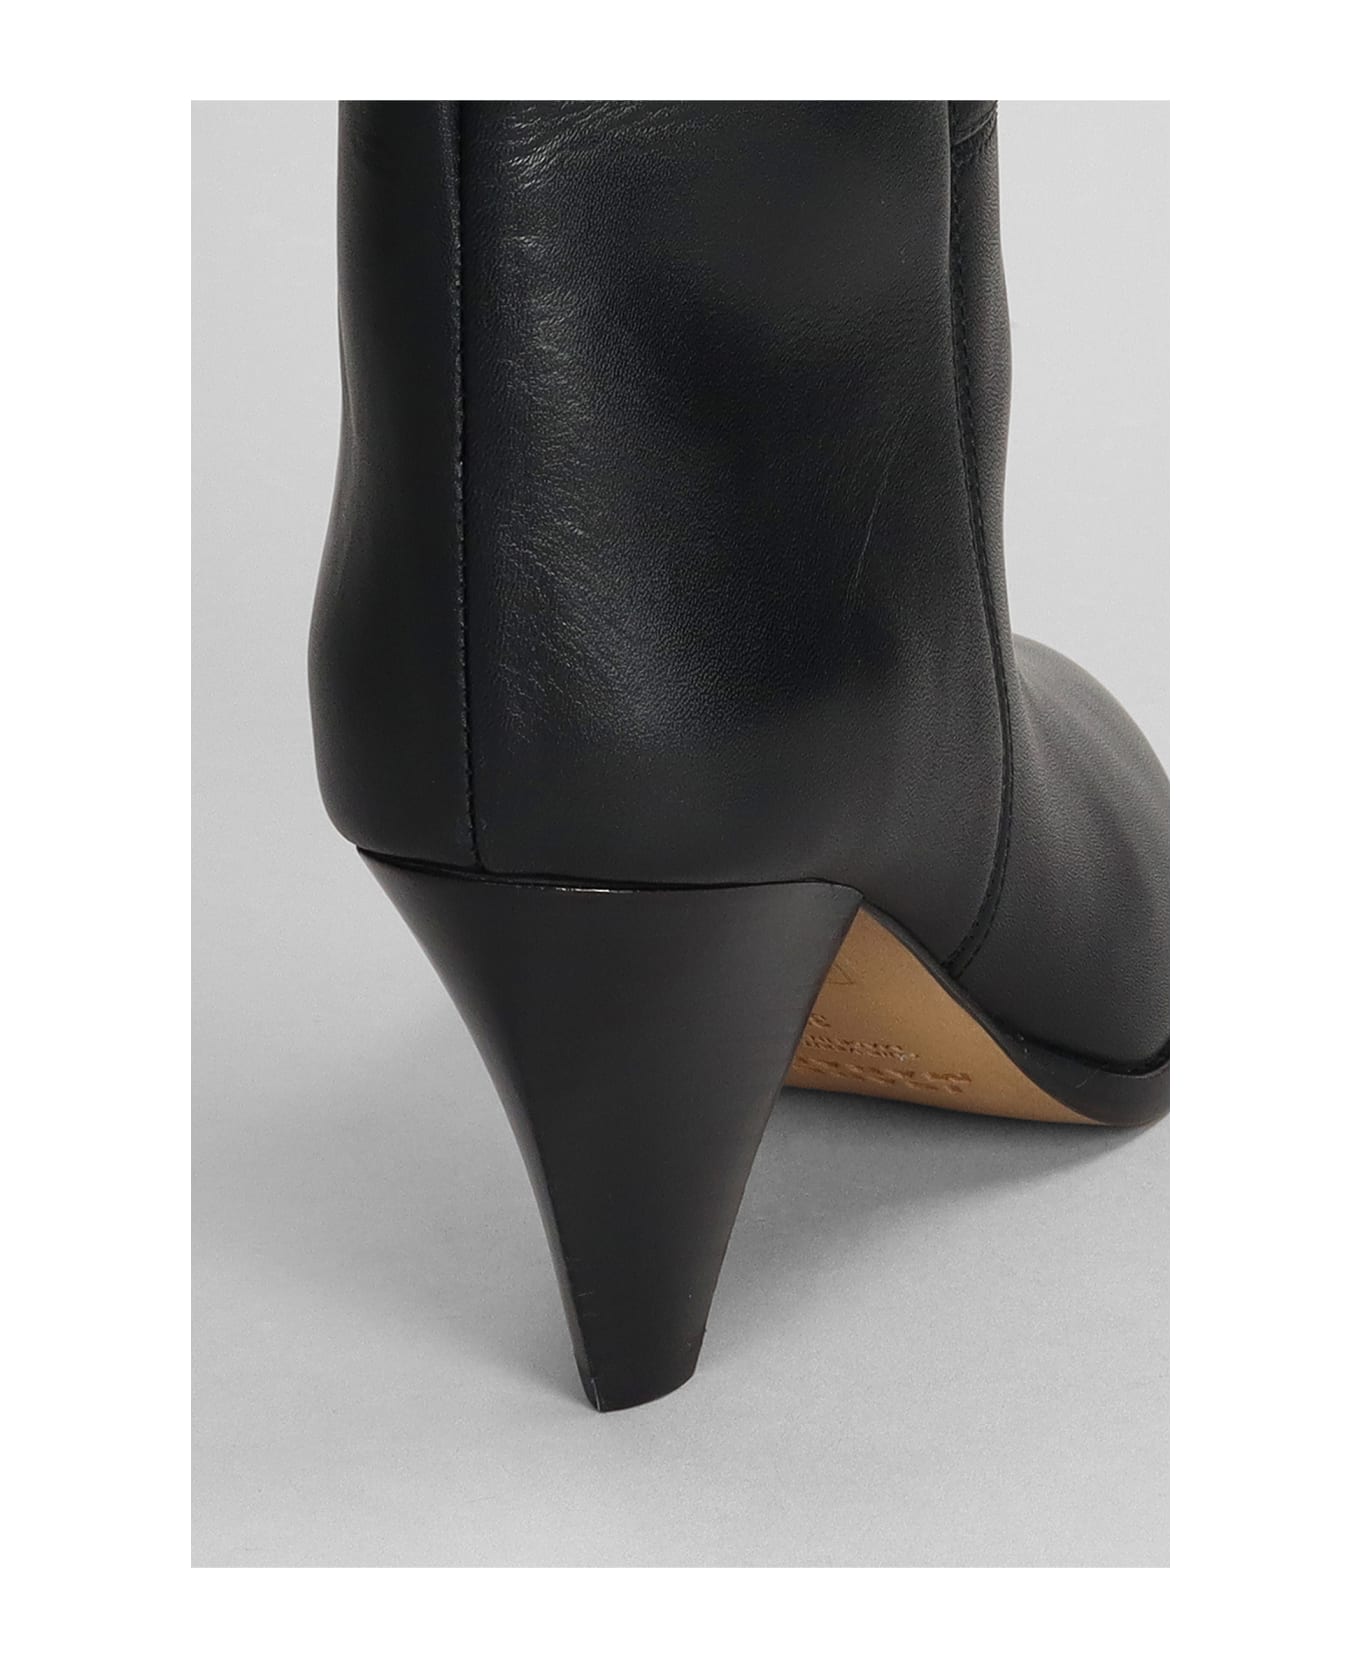 Isabel Marant Rouxa High Heels Ankle Boots - black